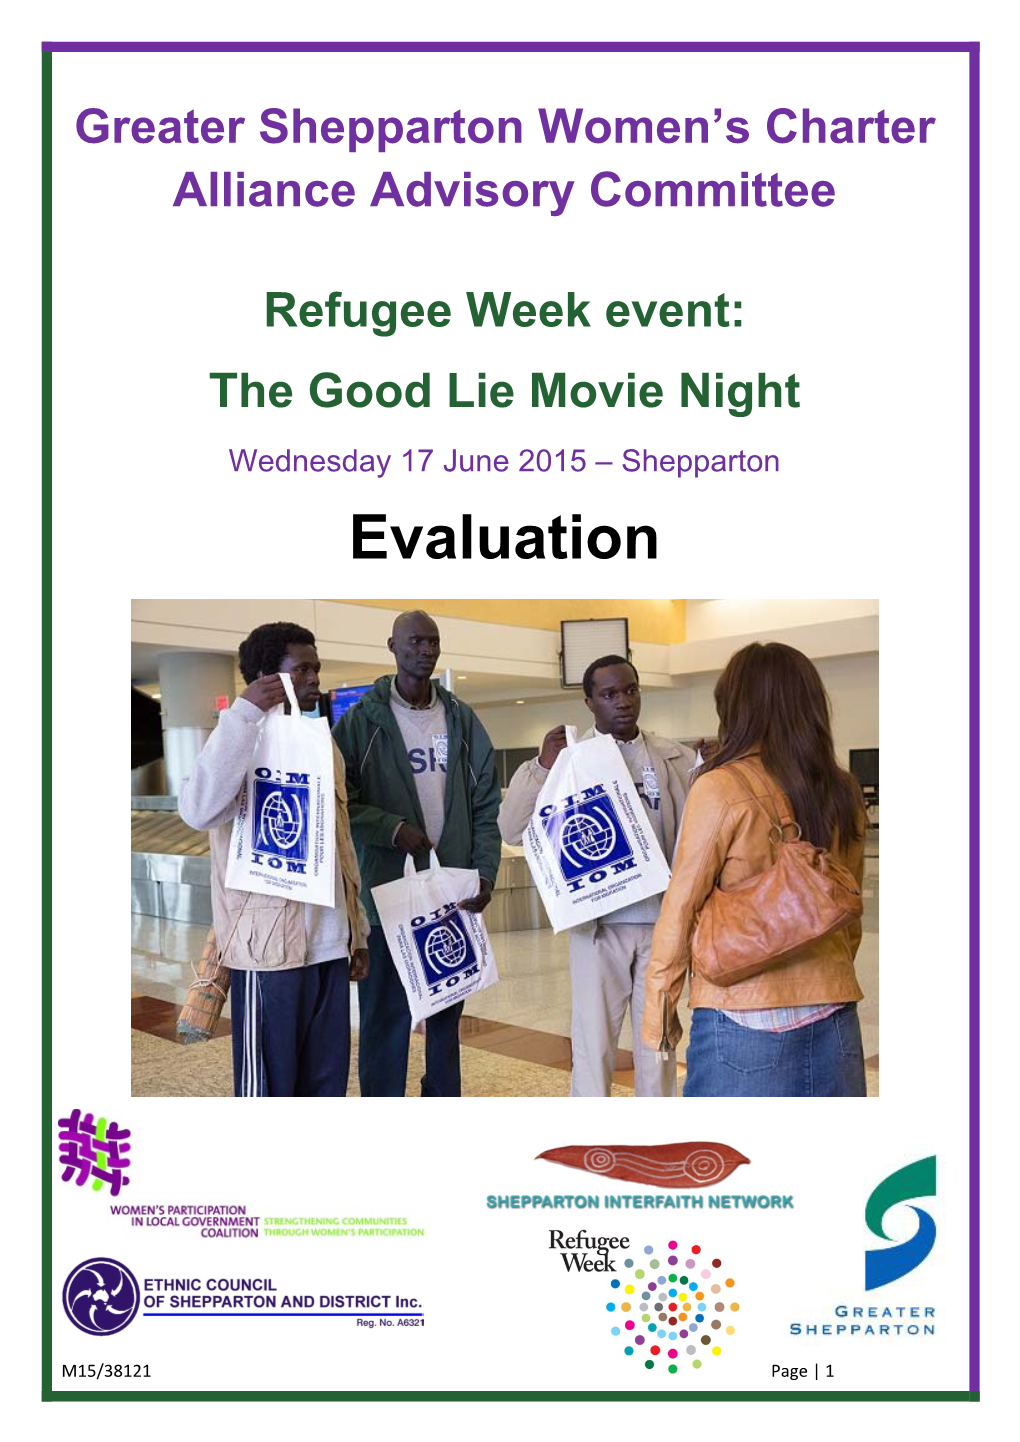 The Good Lie Refugee Week Movie Night Evaluation